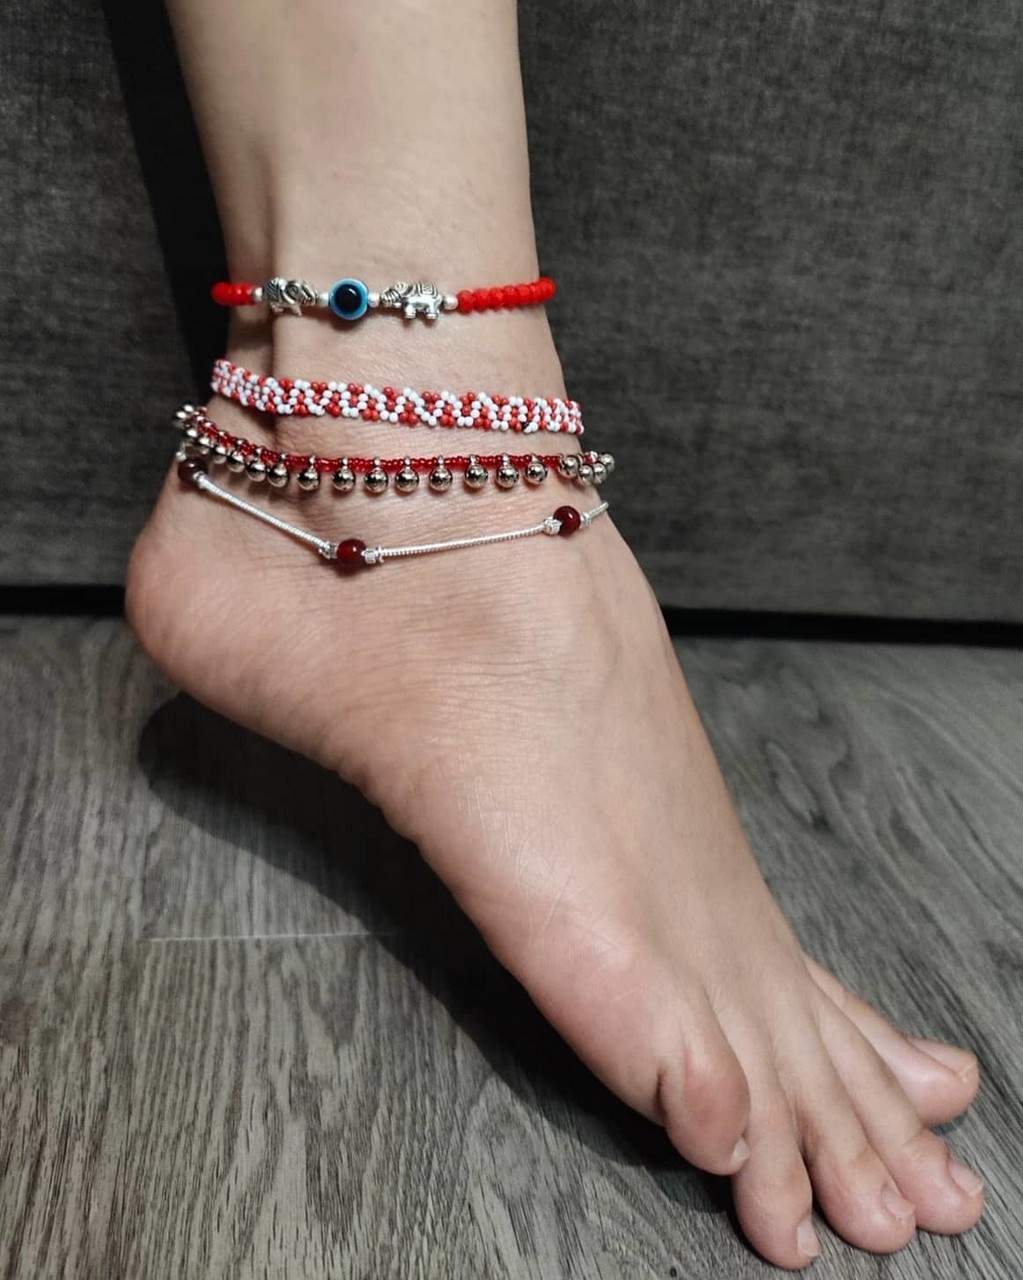 Sukhada Khandkekar Feet